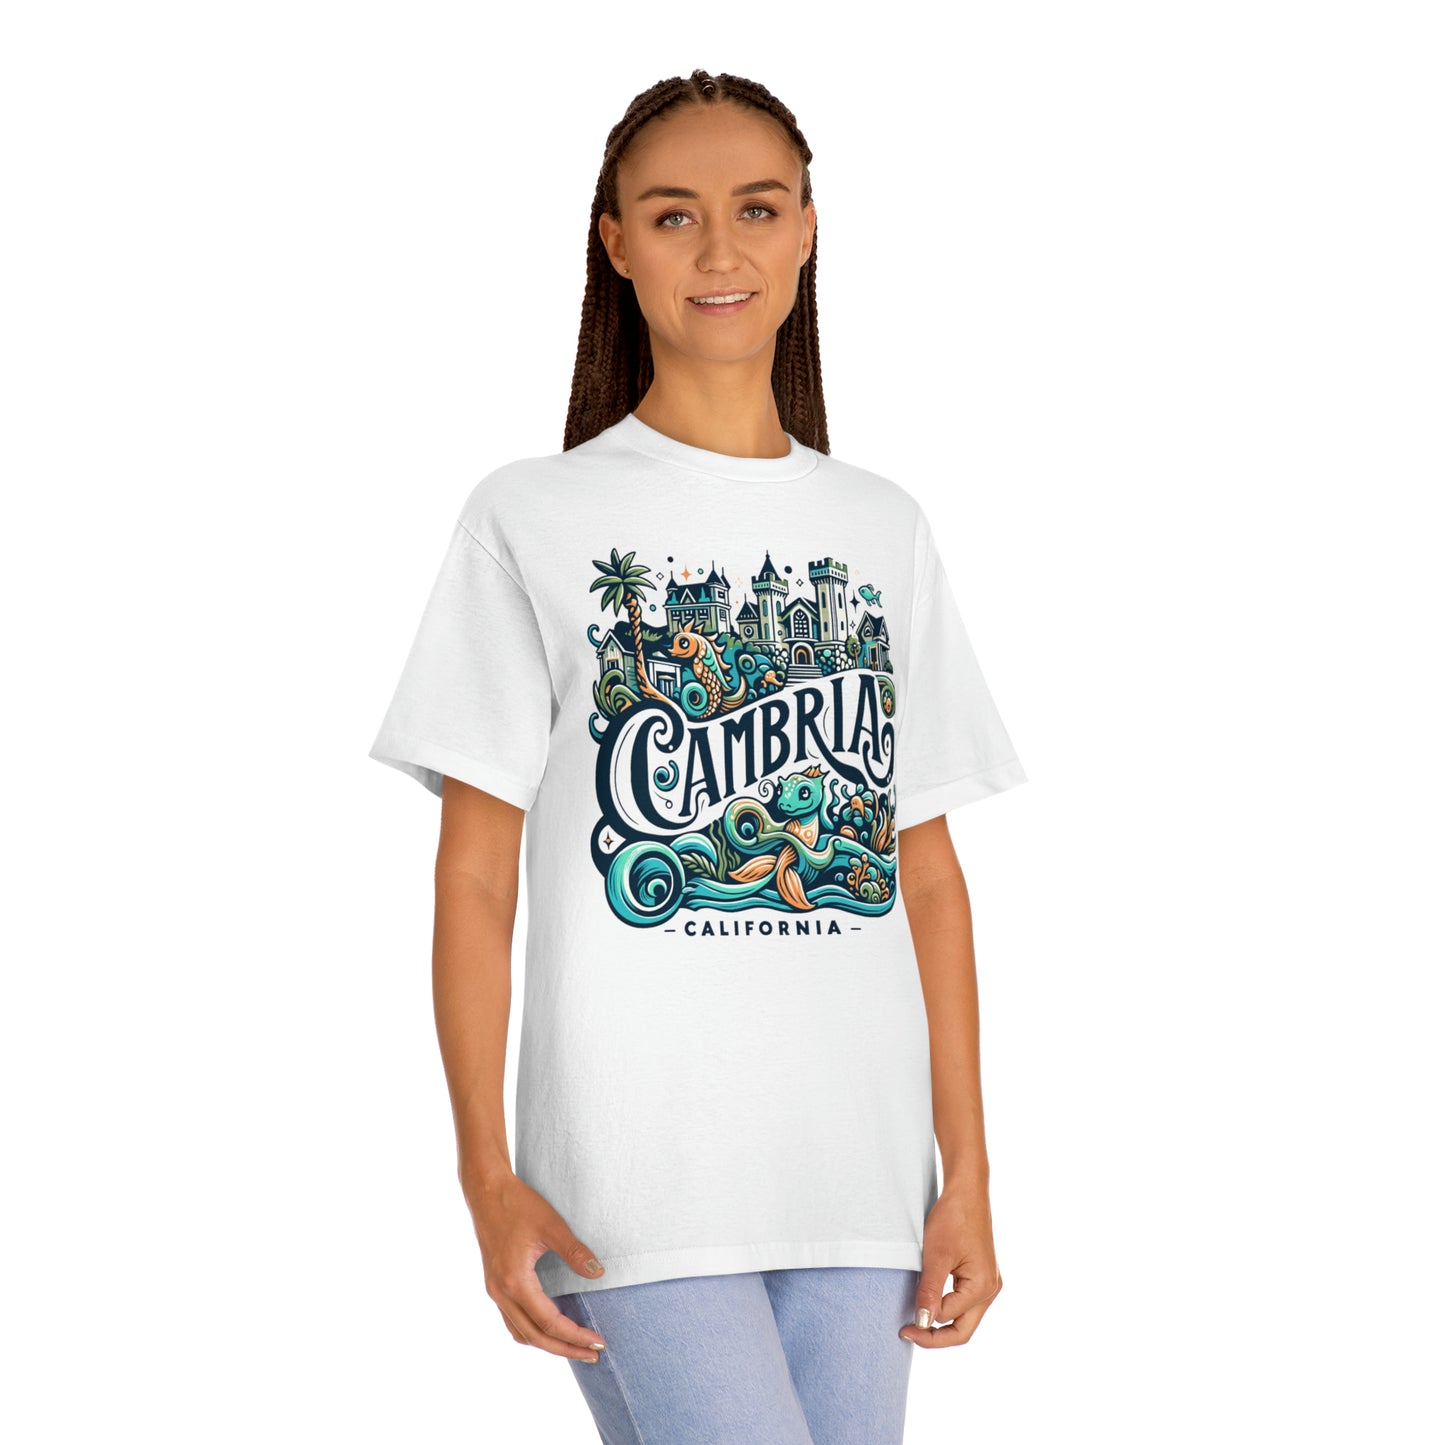 Cambria California Whimsical Coastal Town Tee - SLO CAL Sunshine Spirit Unisex T-shirt